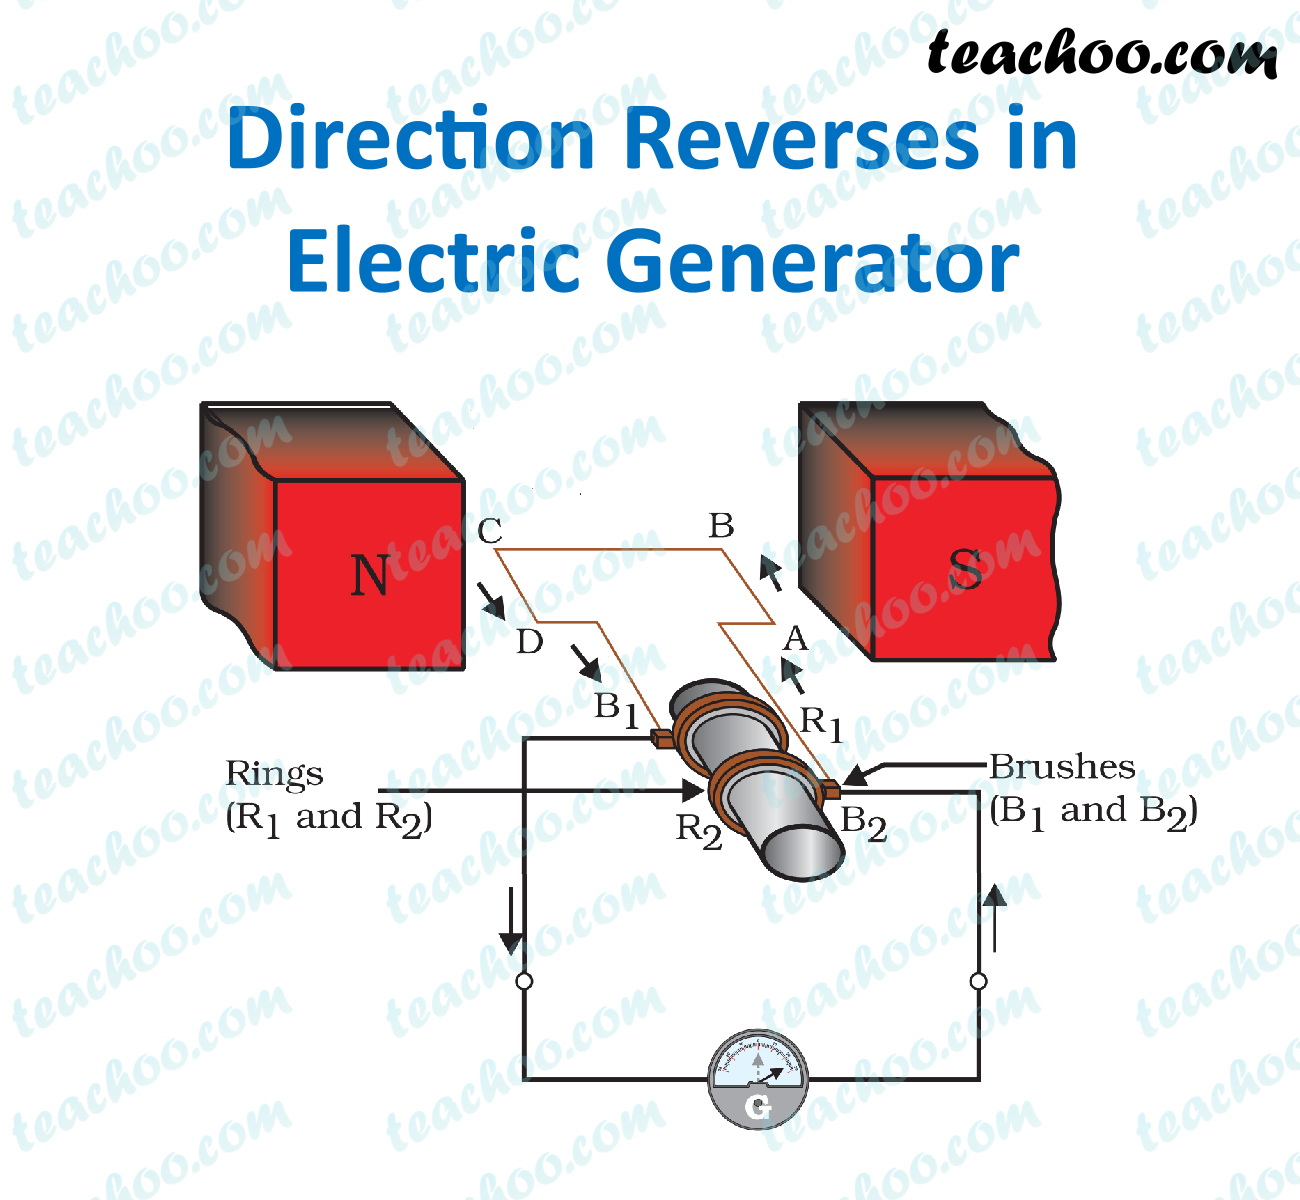 electric-generator---direction-reverses---teachoo.jpg